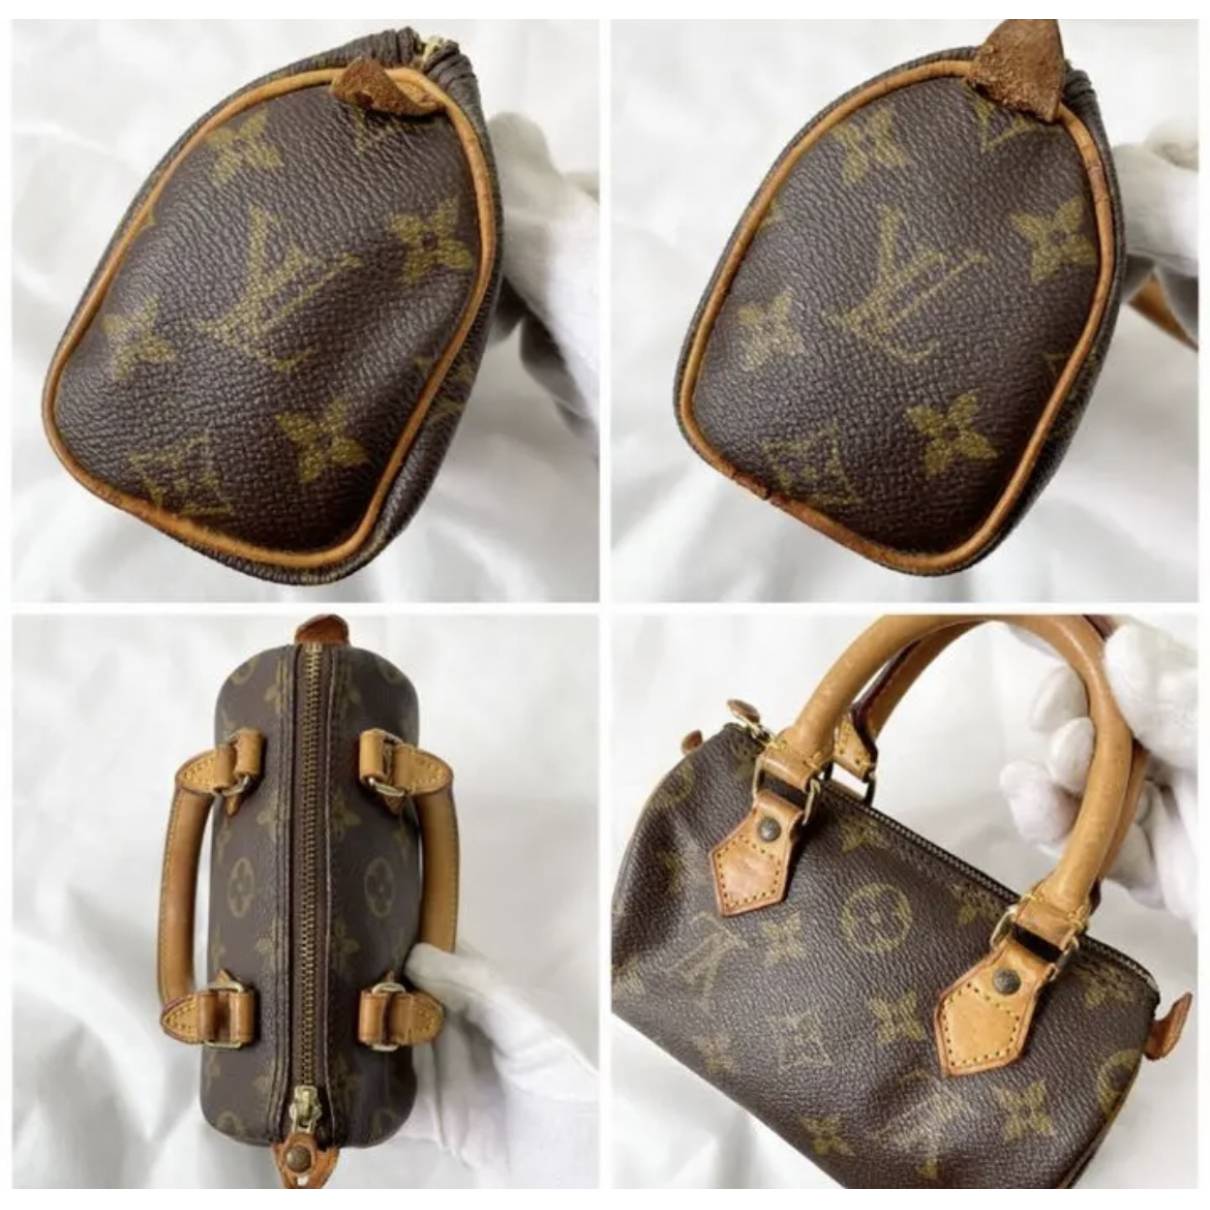 Nano speedy / mini hl leather crossbody bag Louis Vuitton Brown in Leather  - 21369909